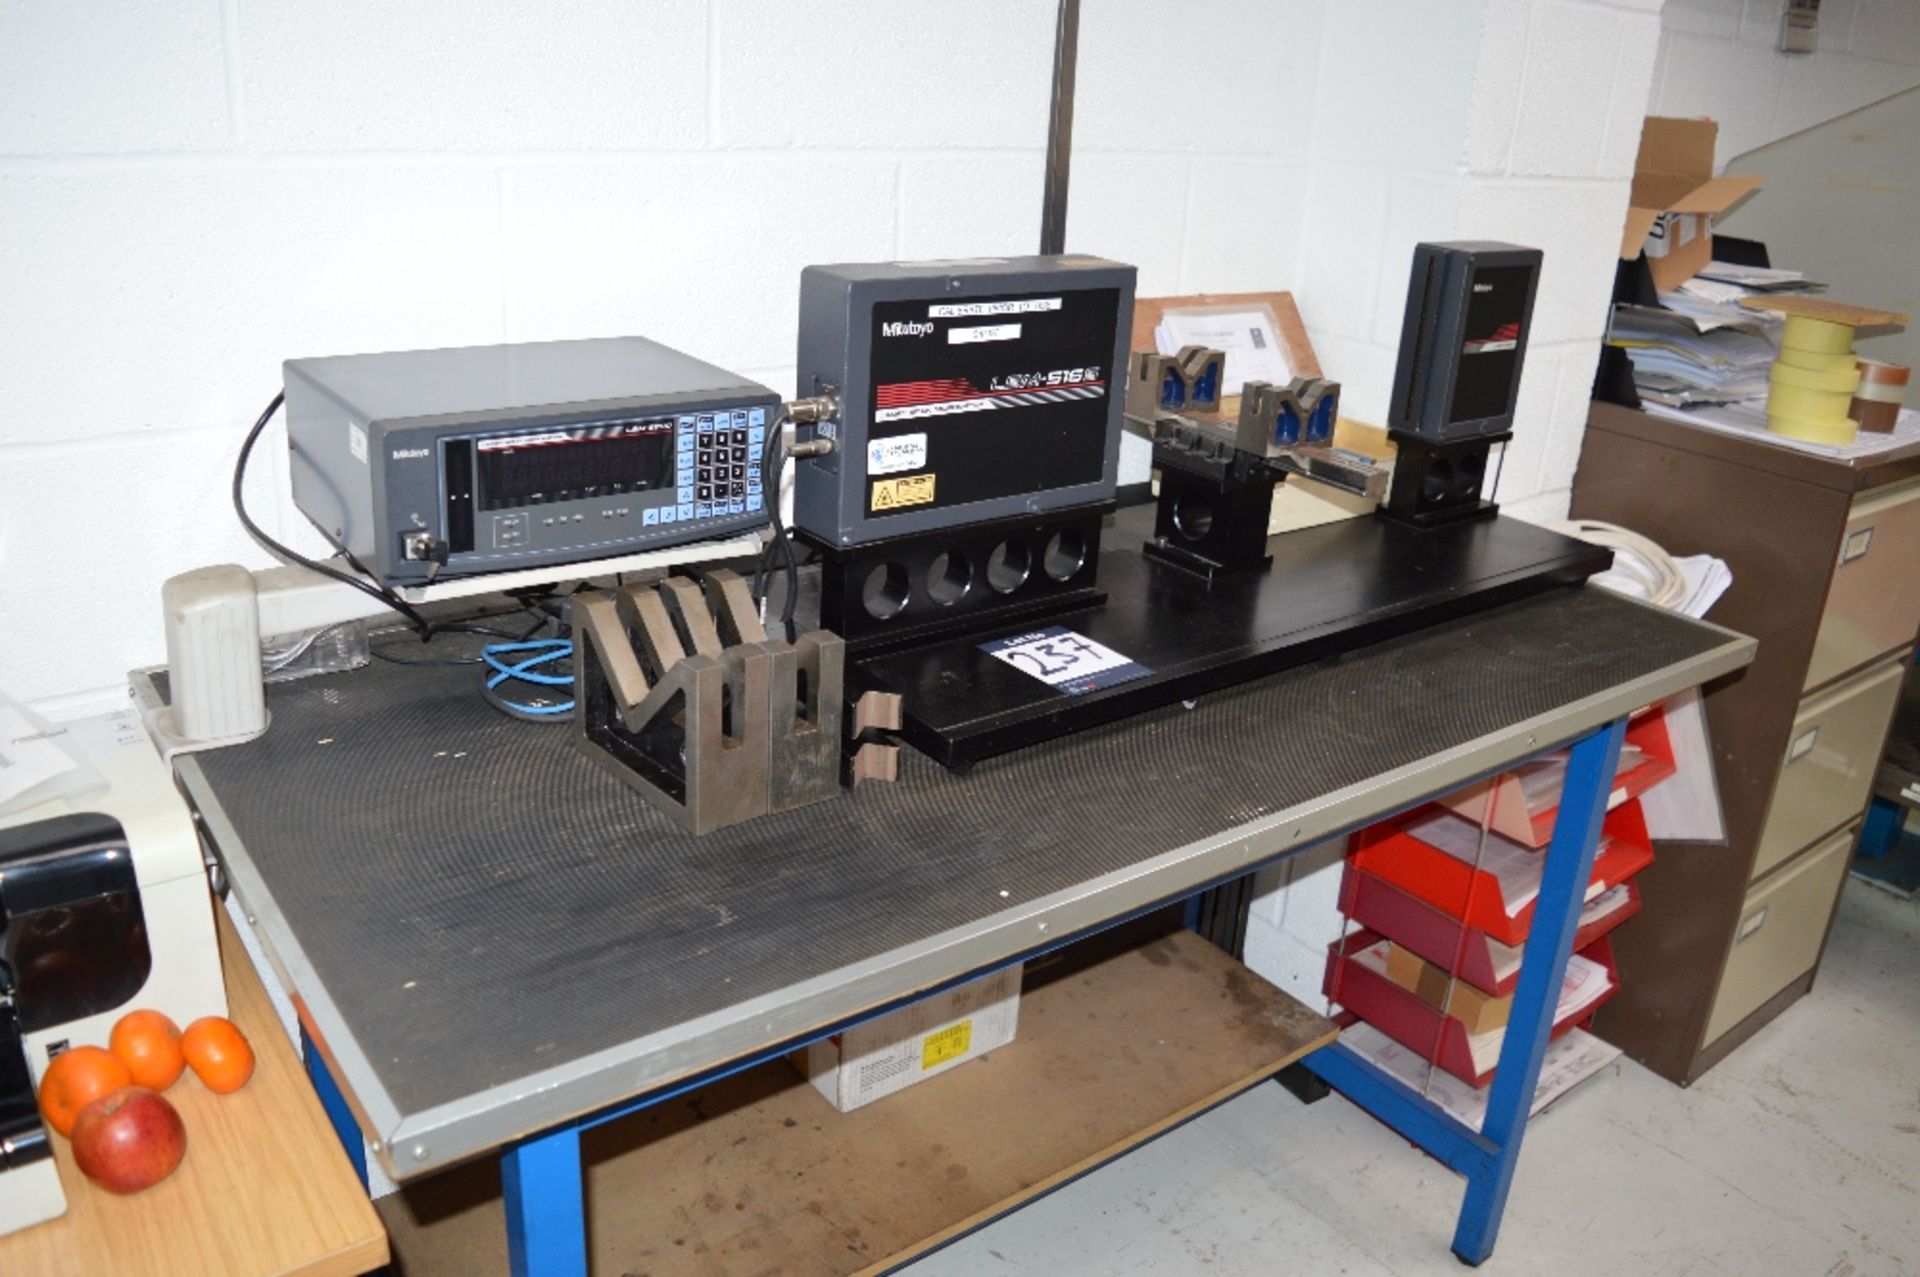 Mitutoyo LSM-516 S laser scan micrometer
Serial no - Image 2 of 5